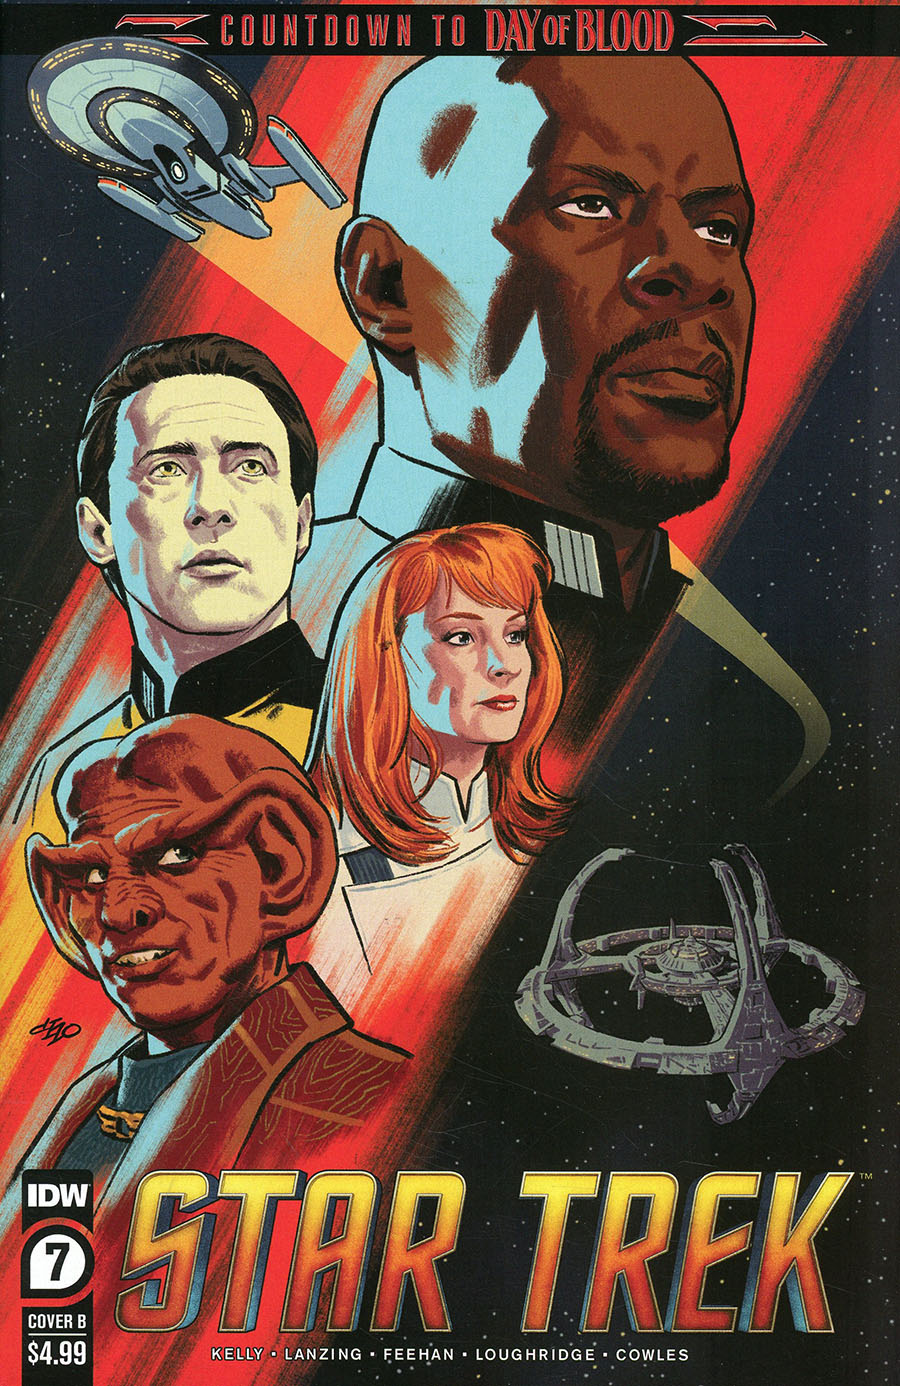 Star Trek (IDW) Vol 2 #7 Cover B Variant Michael Cho Cover